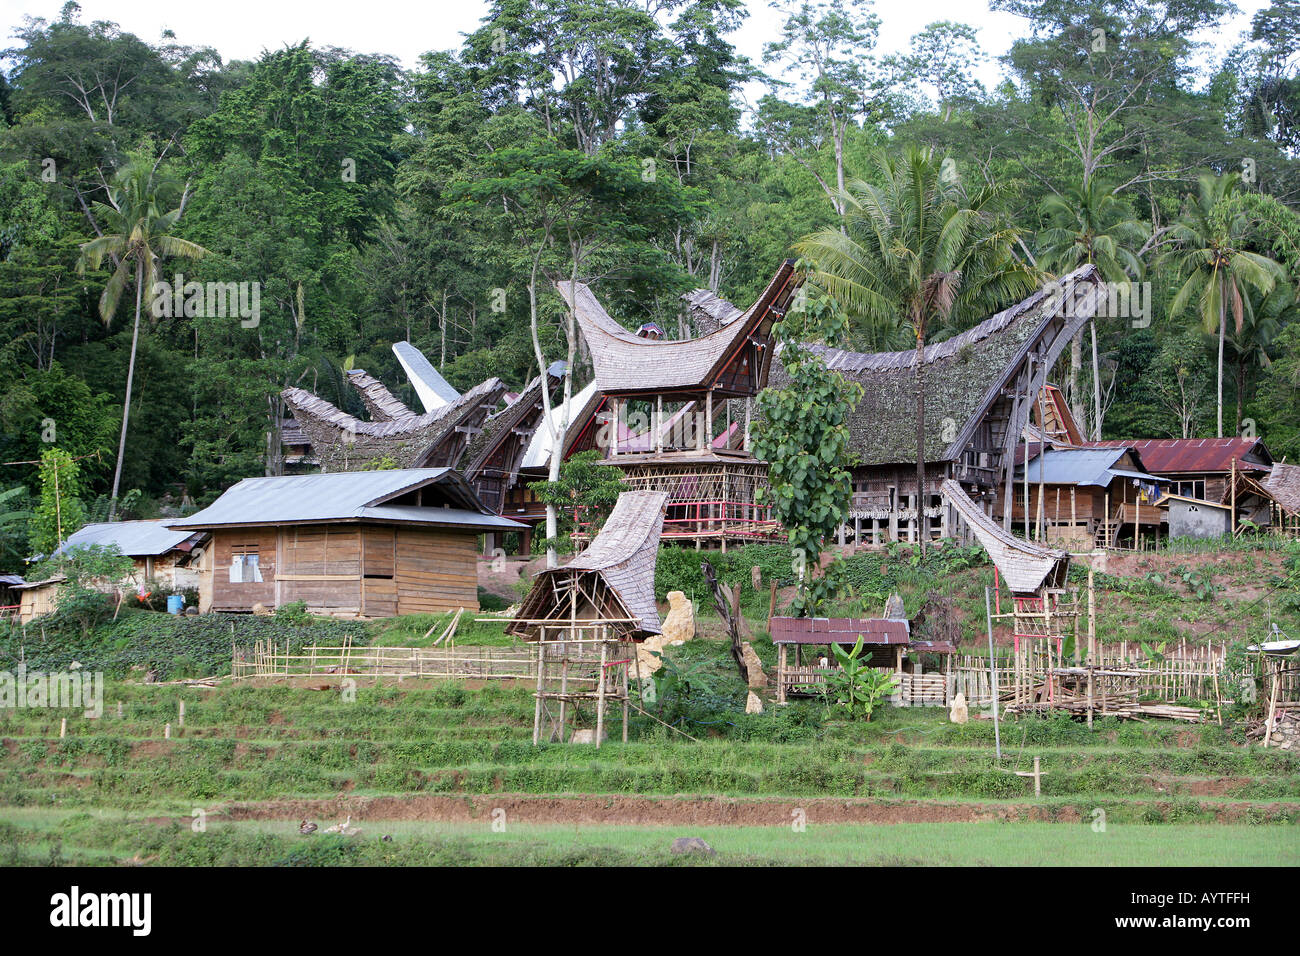 Indonesia, village with Tongkonan houses (rice storage houses). Sulawesi Island near Rantepao Stock Photo